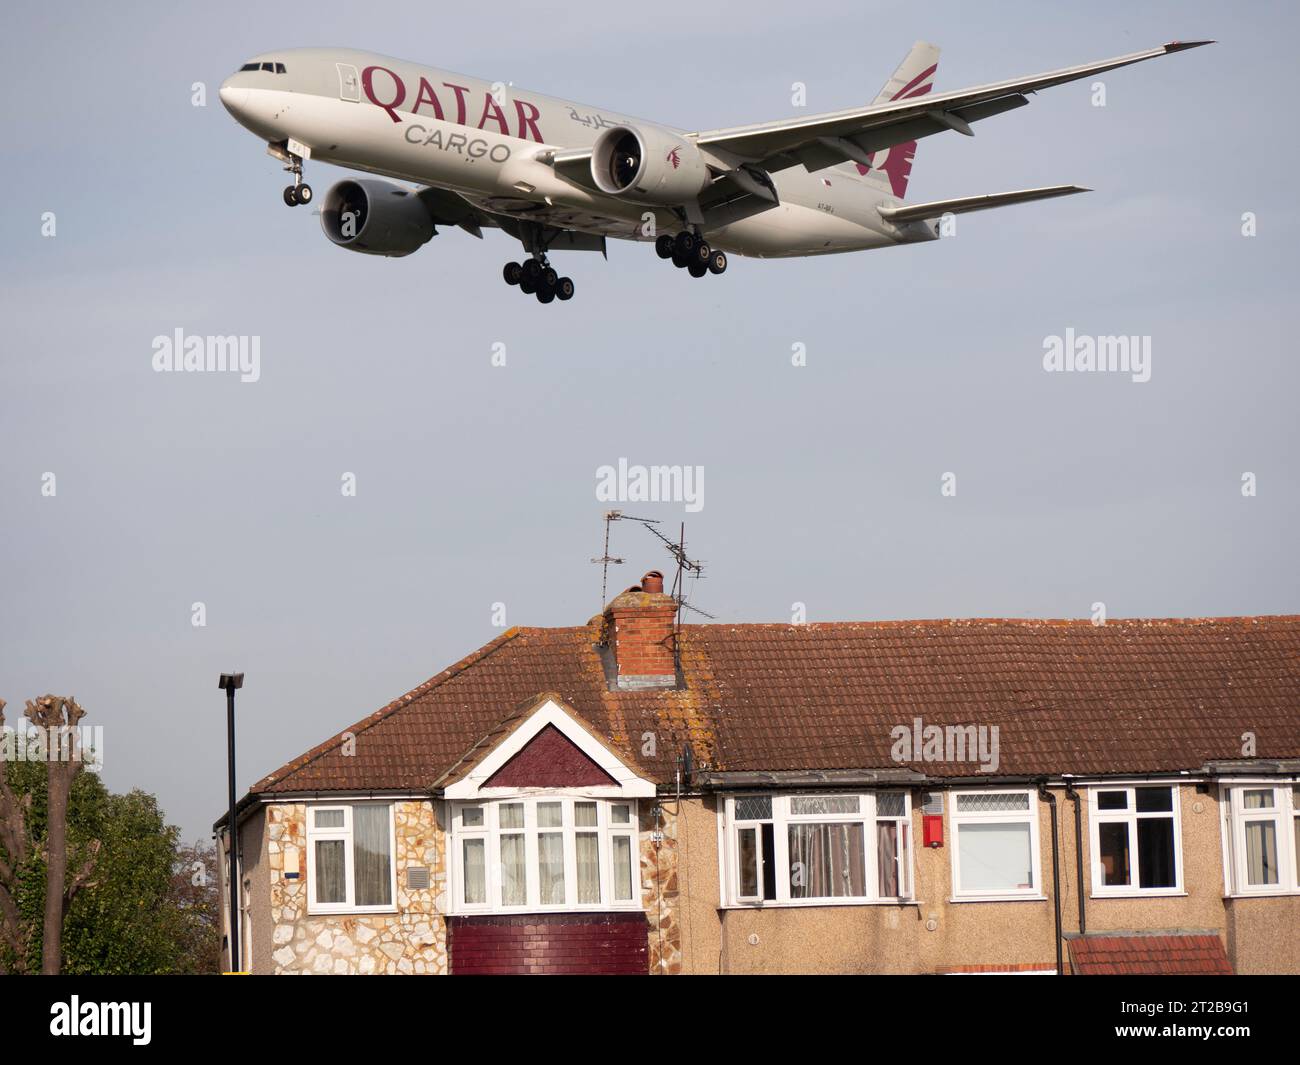 Aeroporto di Londra Heathrow Hounslow Qatar Cargo, gestito da Qatar Airways Boeing 777-FDZ Airways in avvicinamento all'atterraggio a bassa quota volando sopra abitazioni residenziali Foto Stock